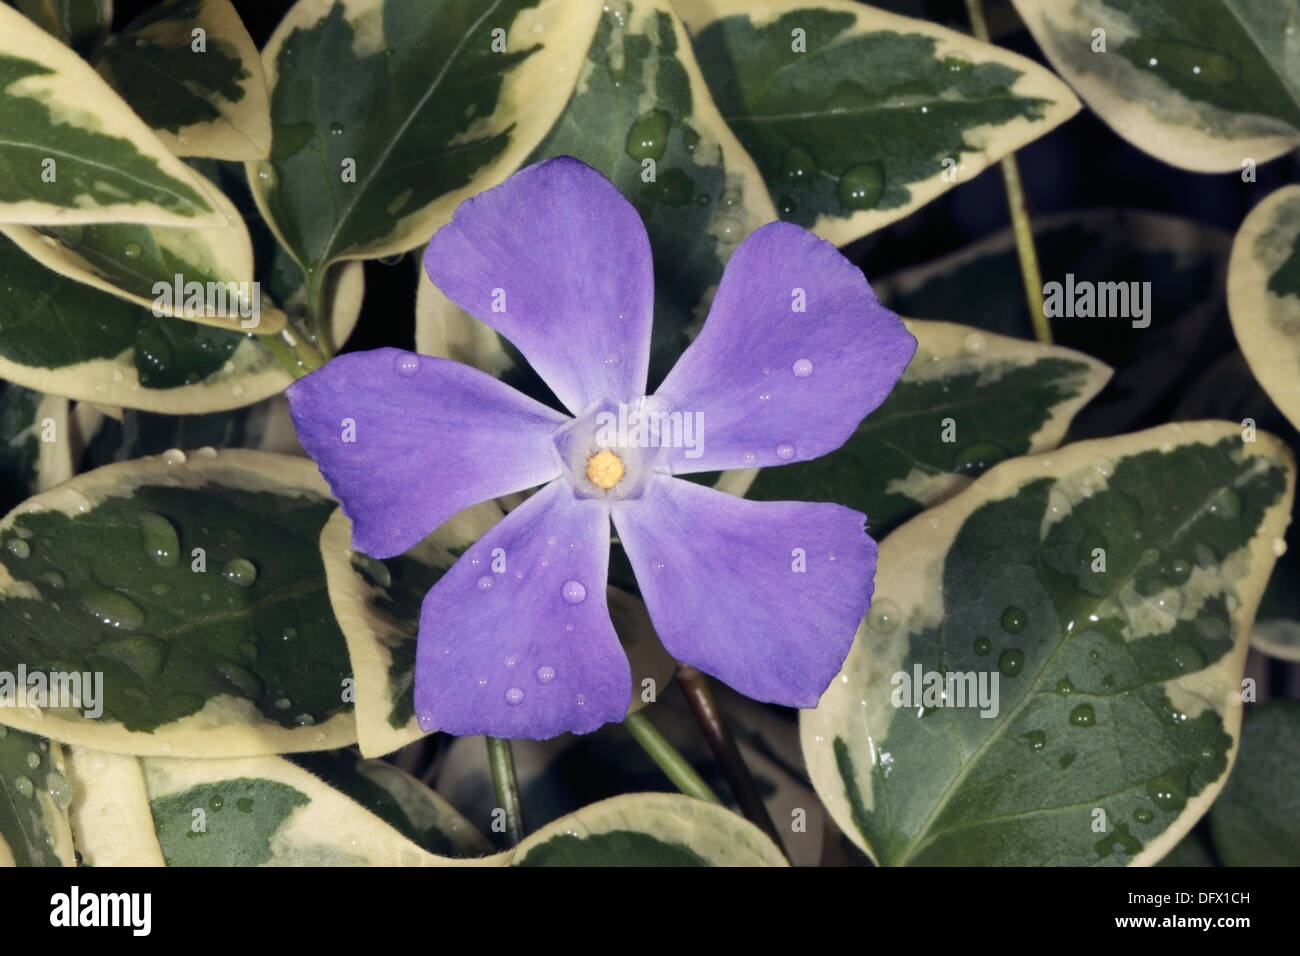 Greater/ Bigleaf/ Large / Blue/ Periwinkle Flower, variegated leaf variety -Vinca major-Family Apocynaceae Stock Photo